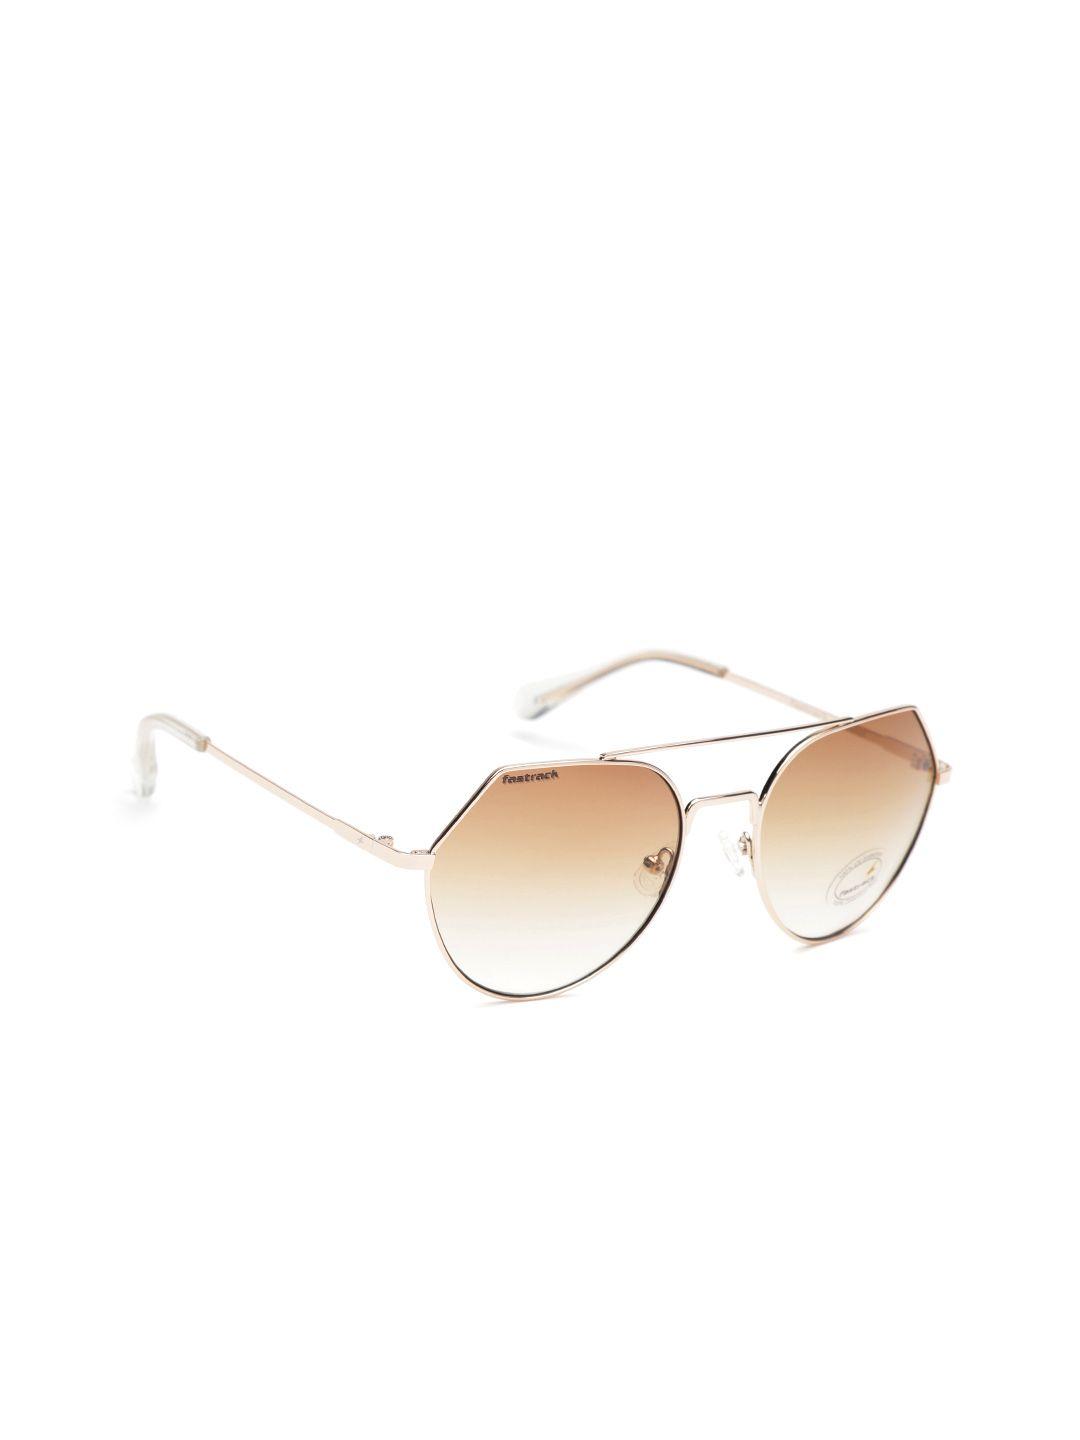 fastrack-women-oval-sunglasses-nbm192br2f